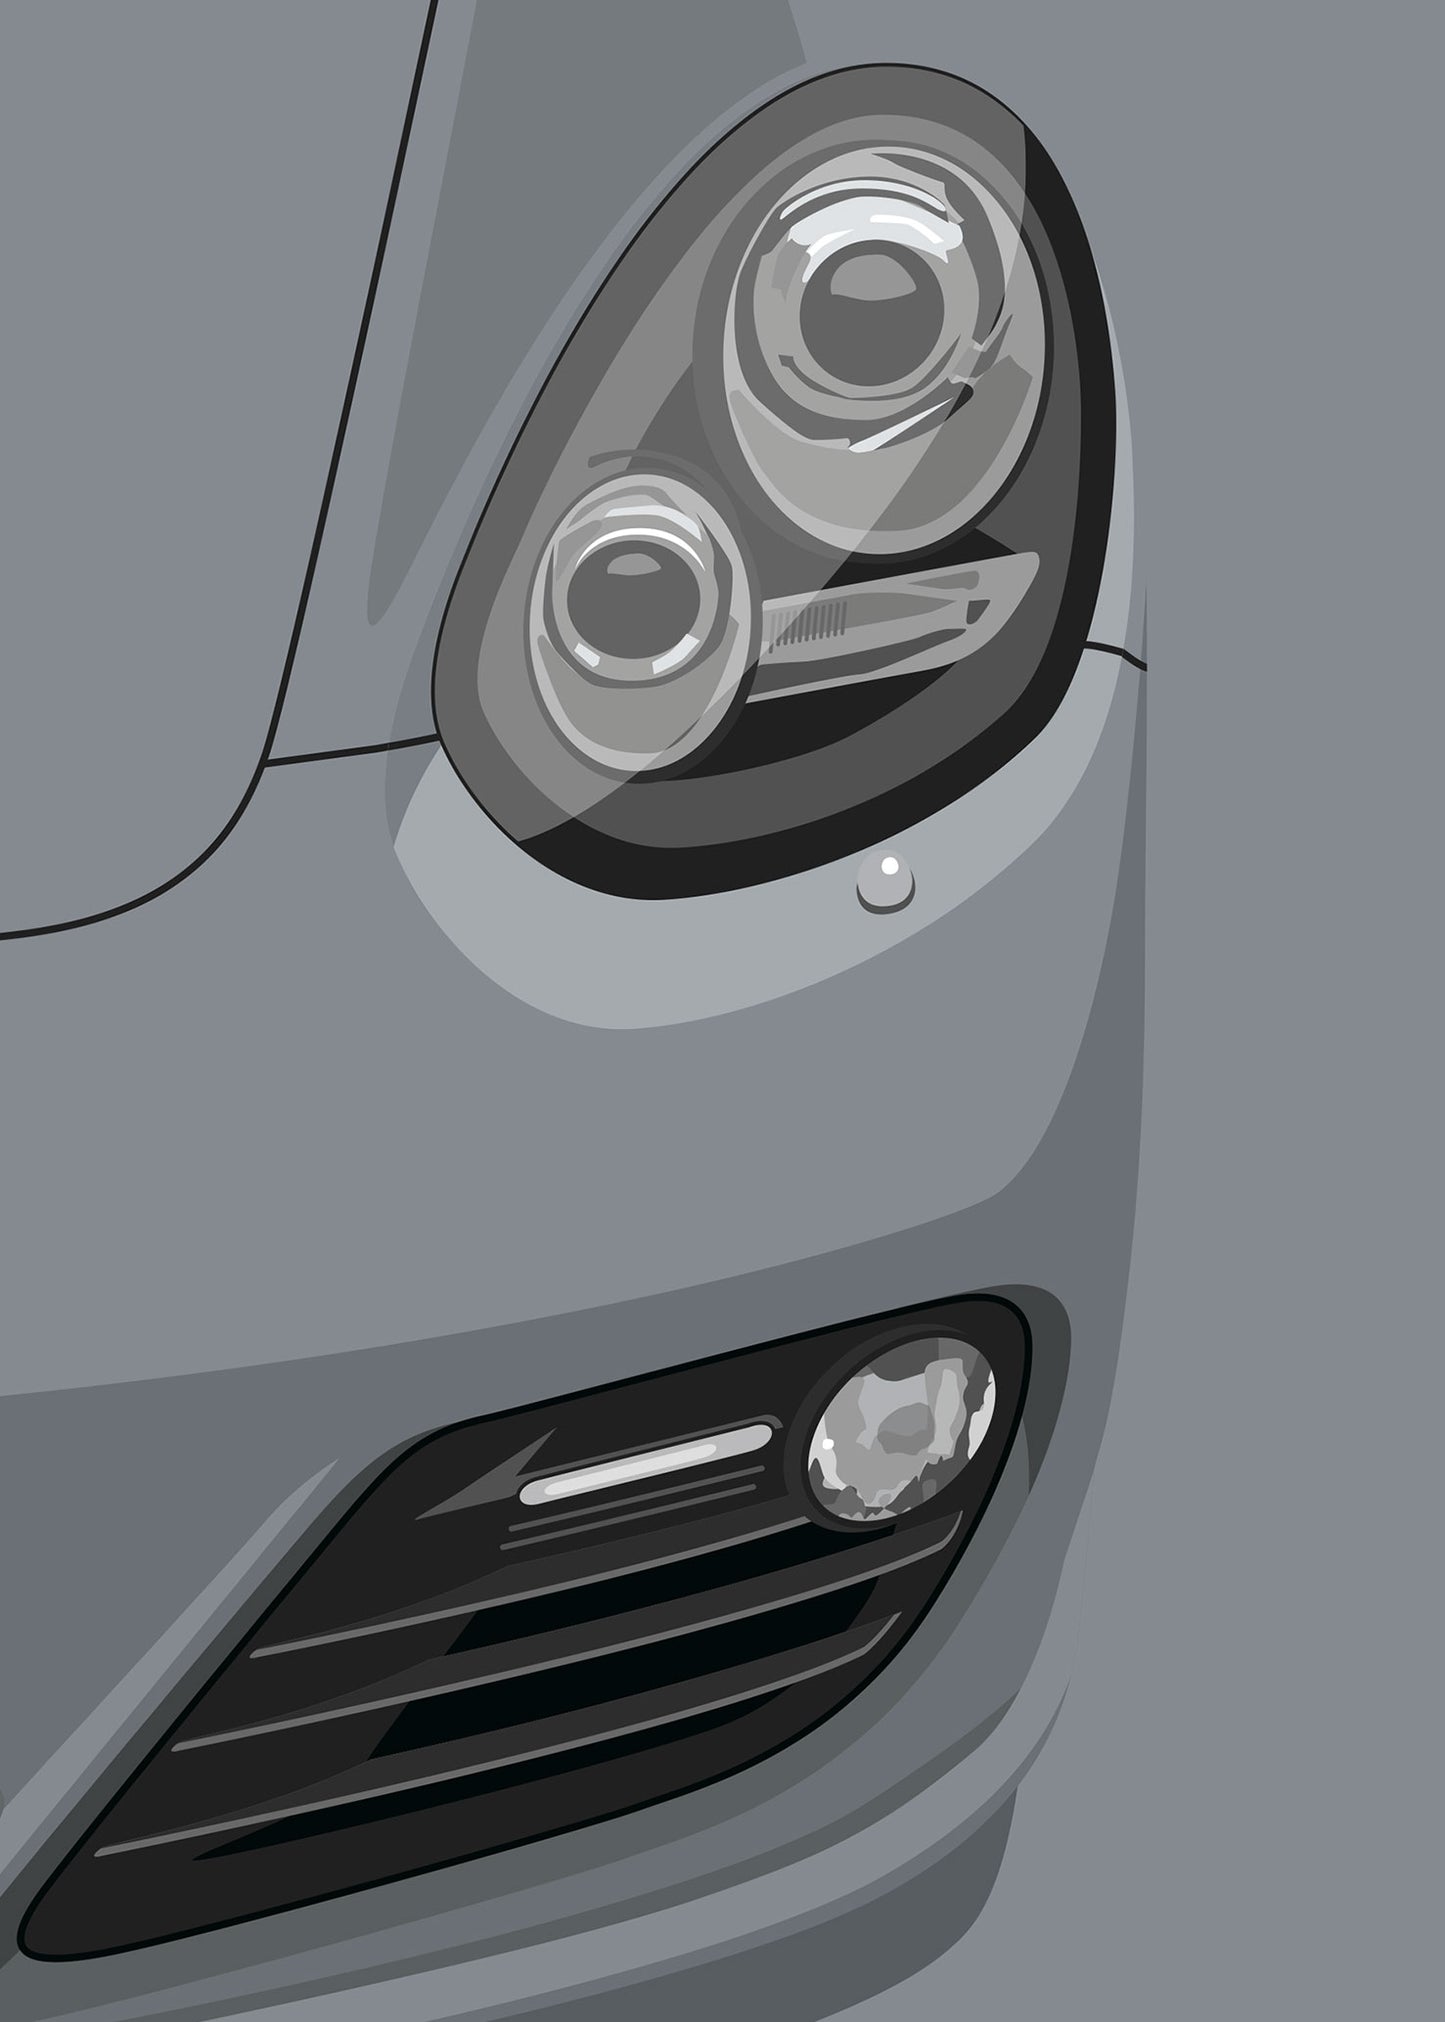 2009 Porsche Cayman S (987.2) Meteor Grey - poster print